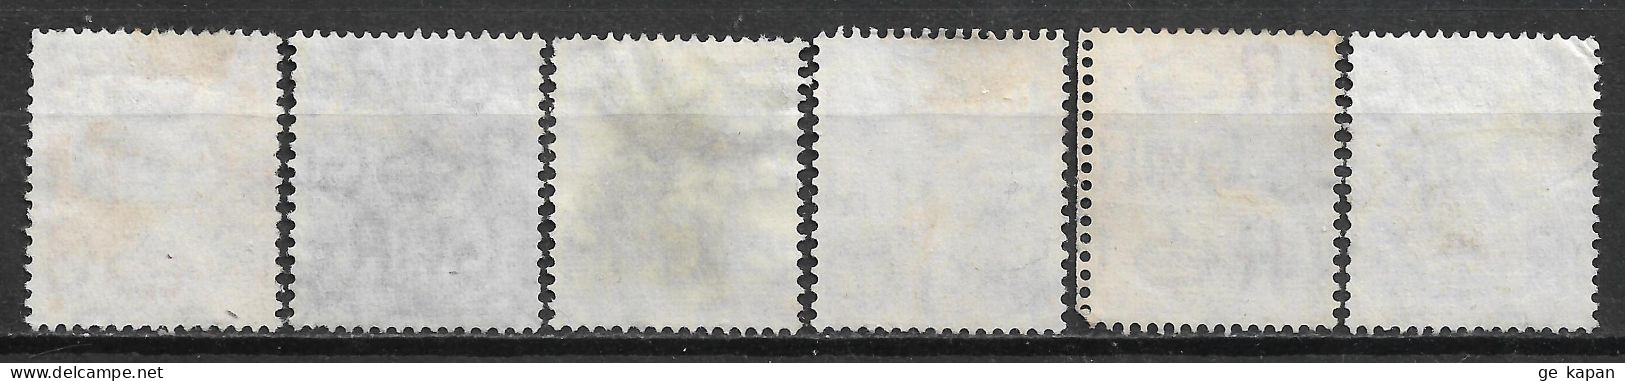 1950-1951 GREAT BRITAIN Complete Set Of 6 Used Stamps (Scott # 280-285) CV $4.00 - Oblitérés